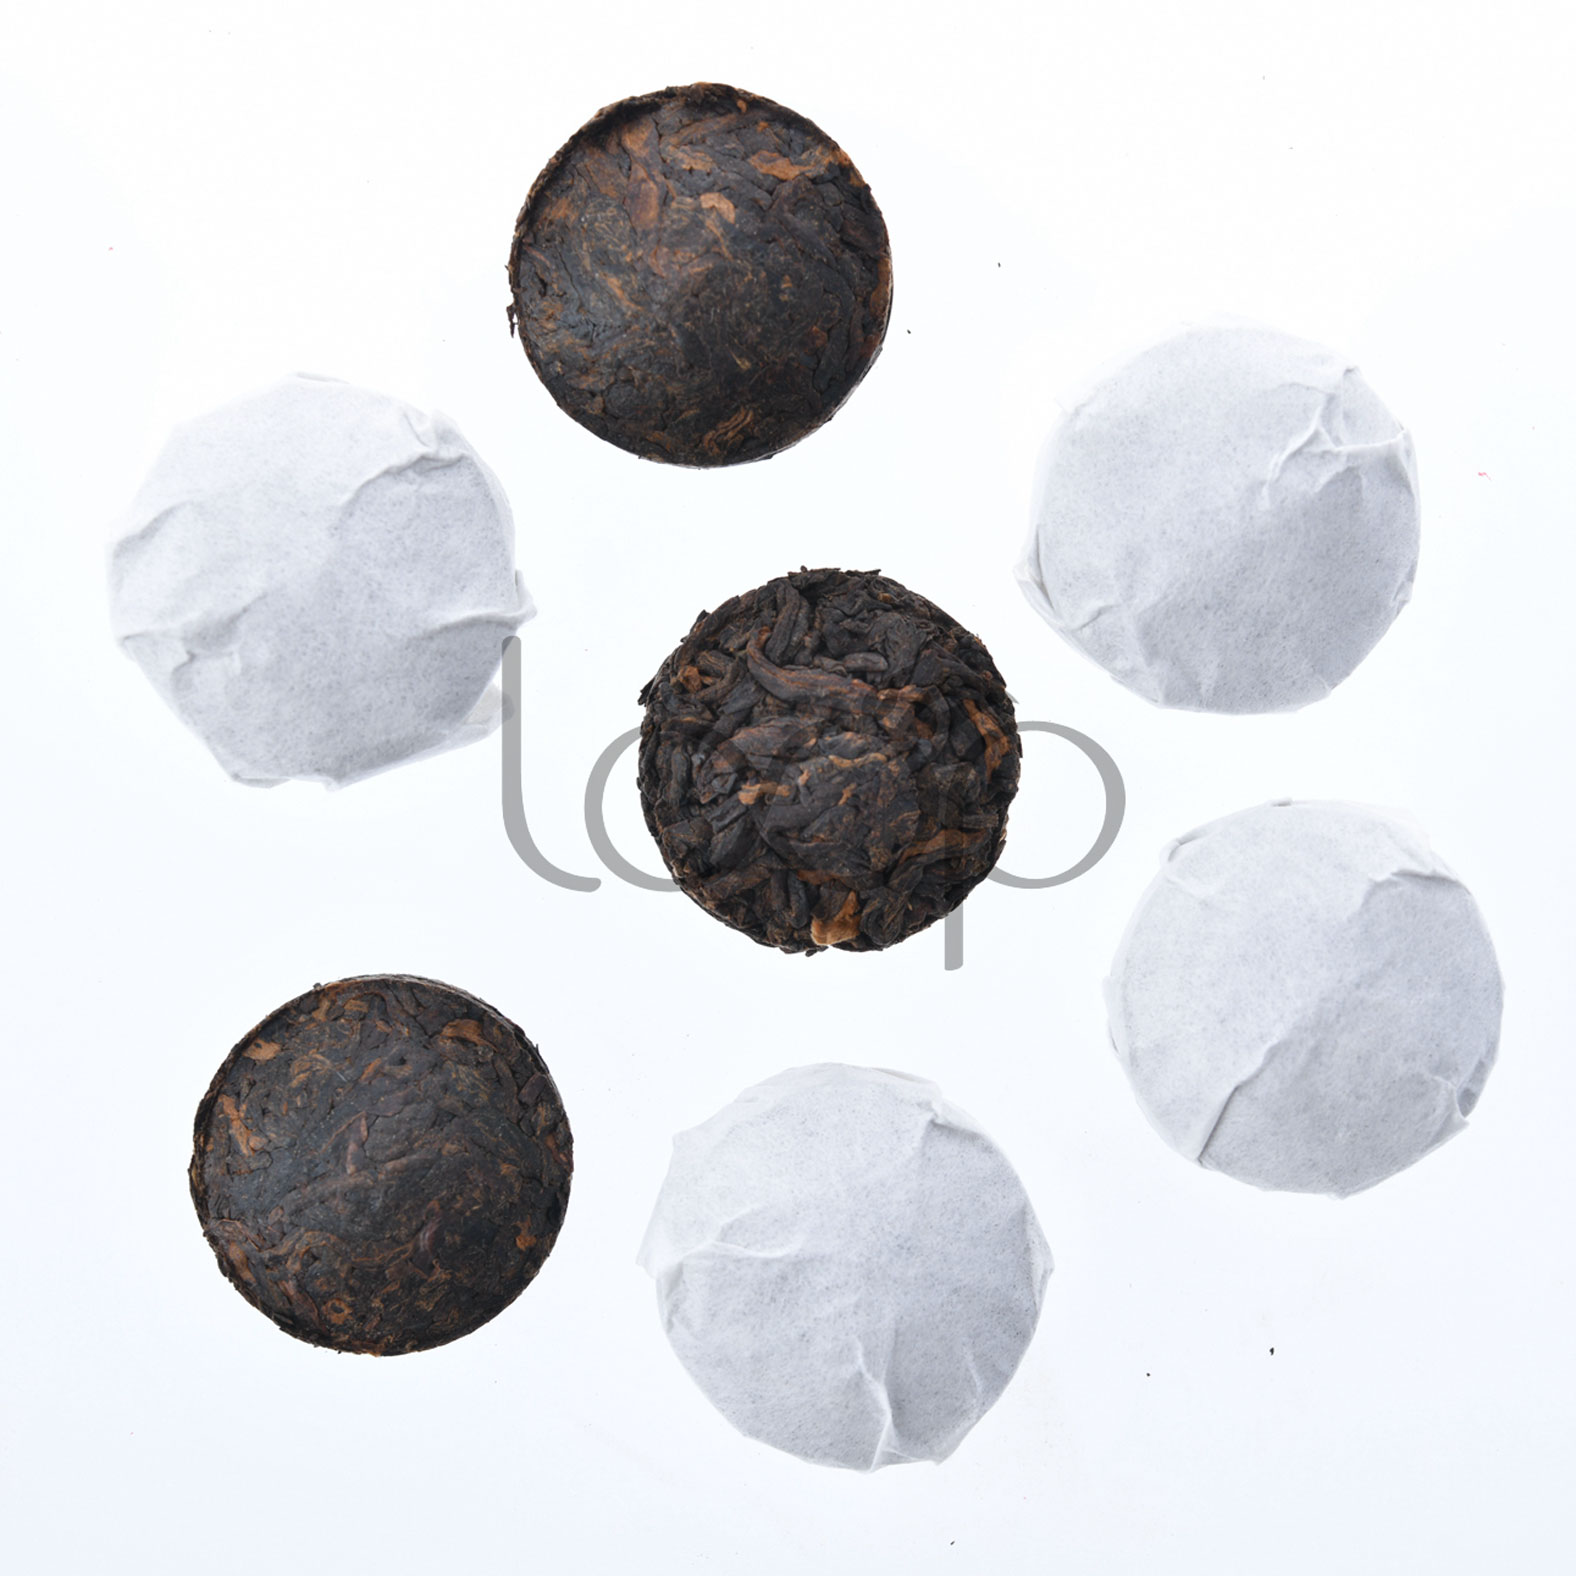 Wholesale Price China Organic Ginger Peach Tea - Tuo Cha Puerh Tuo Tea #1 – Goodtea